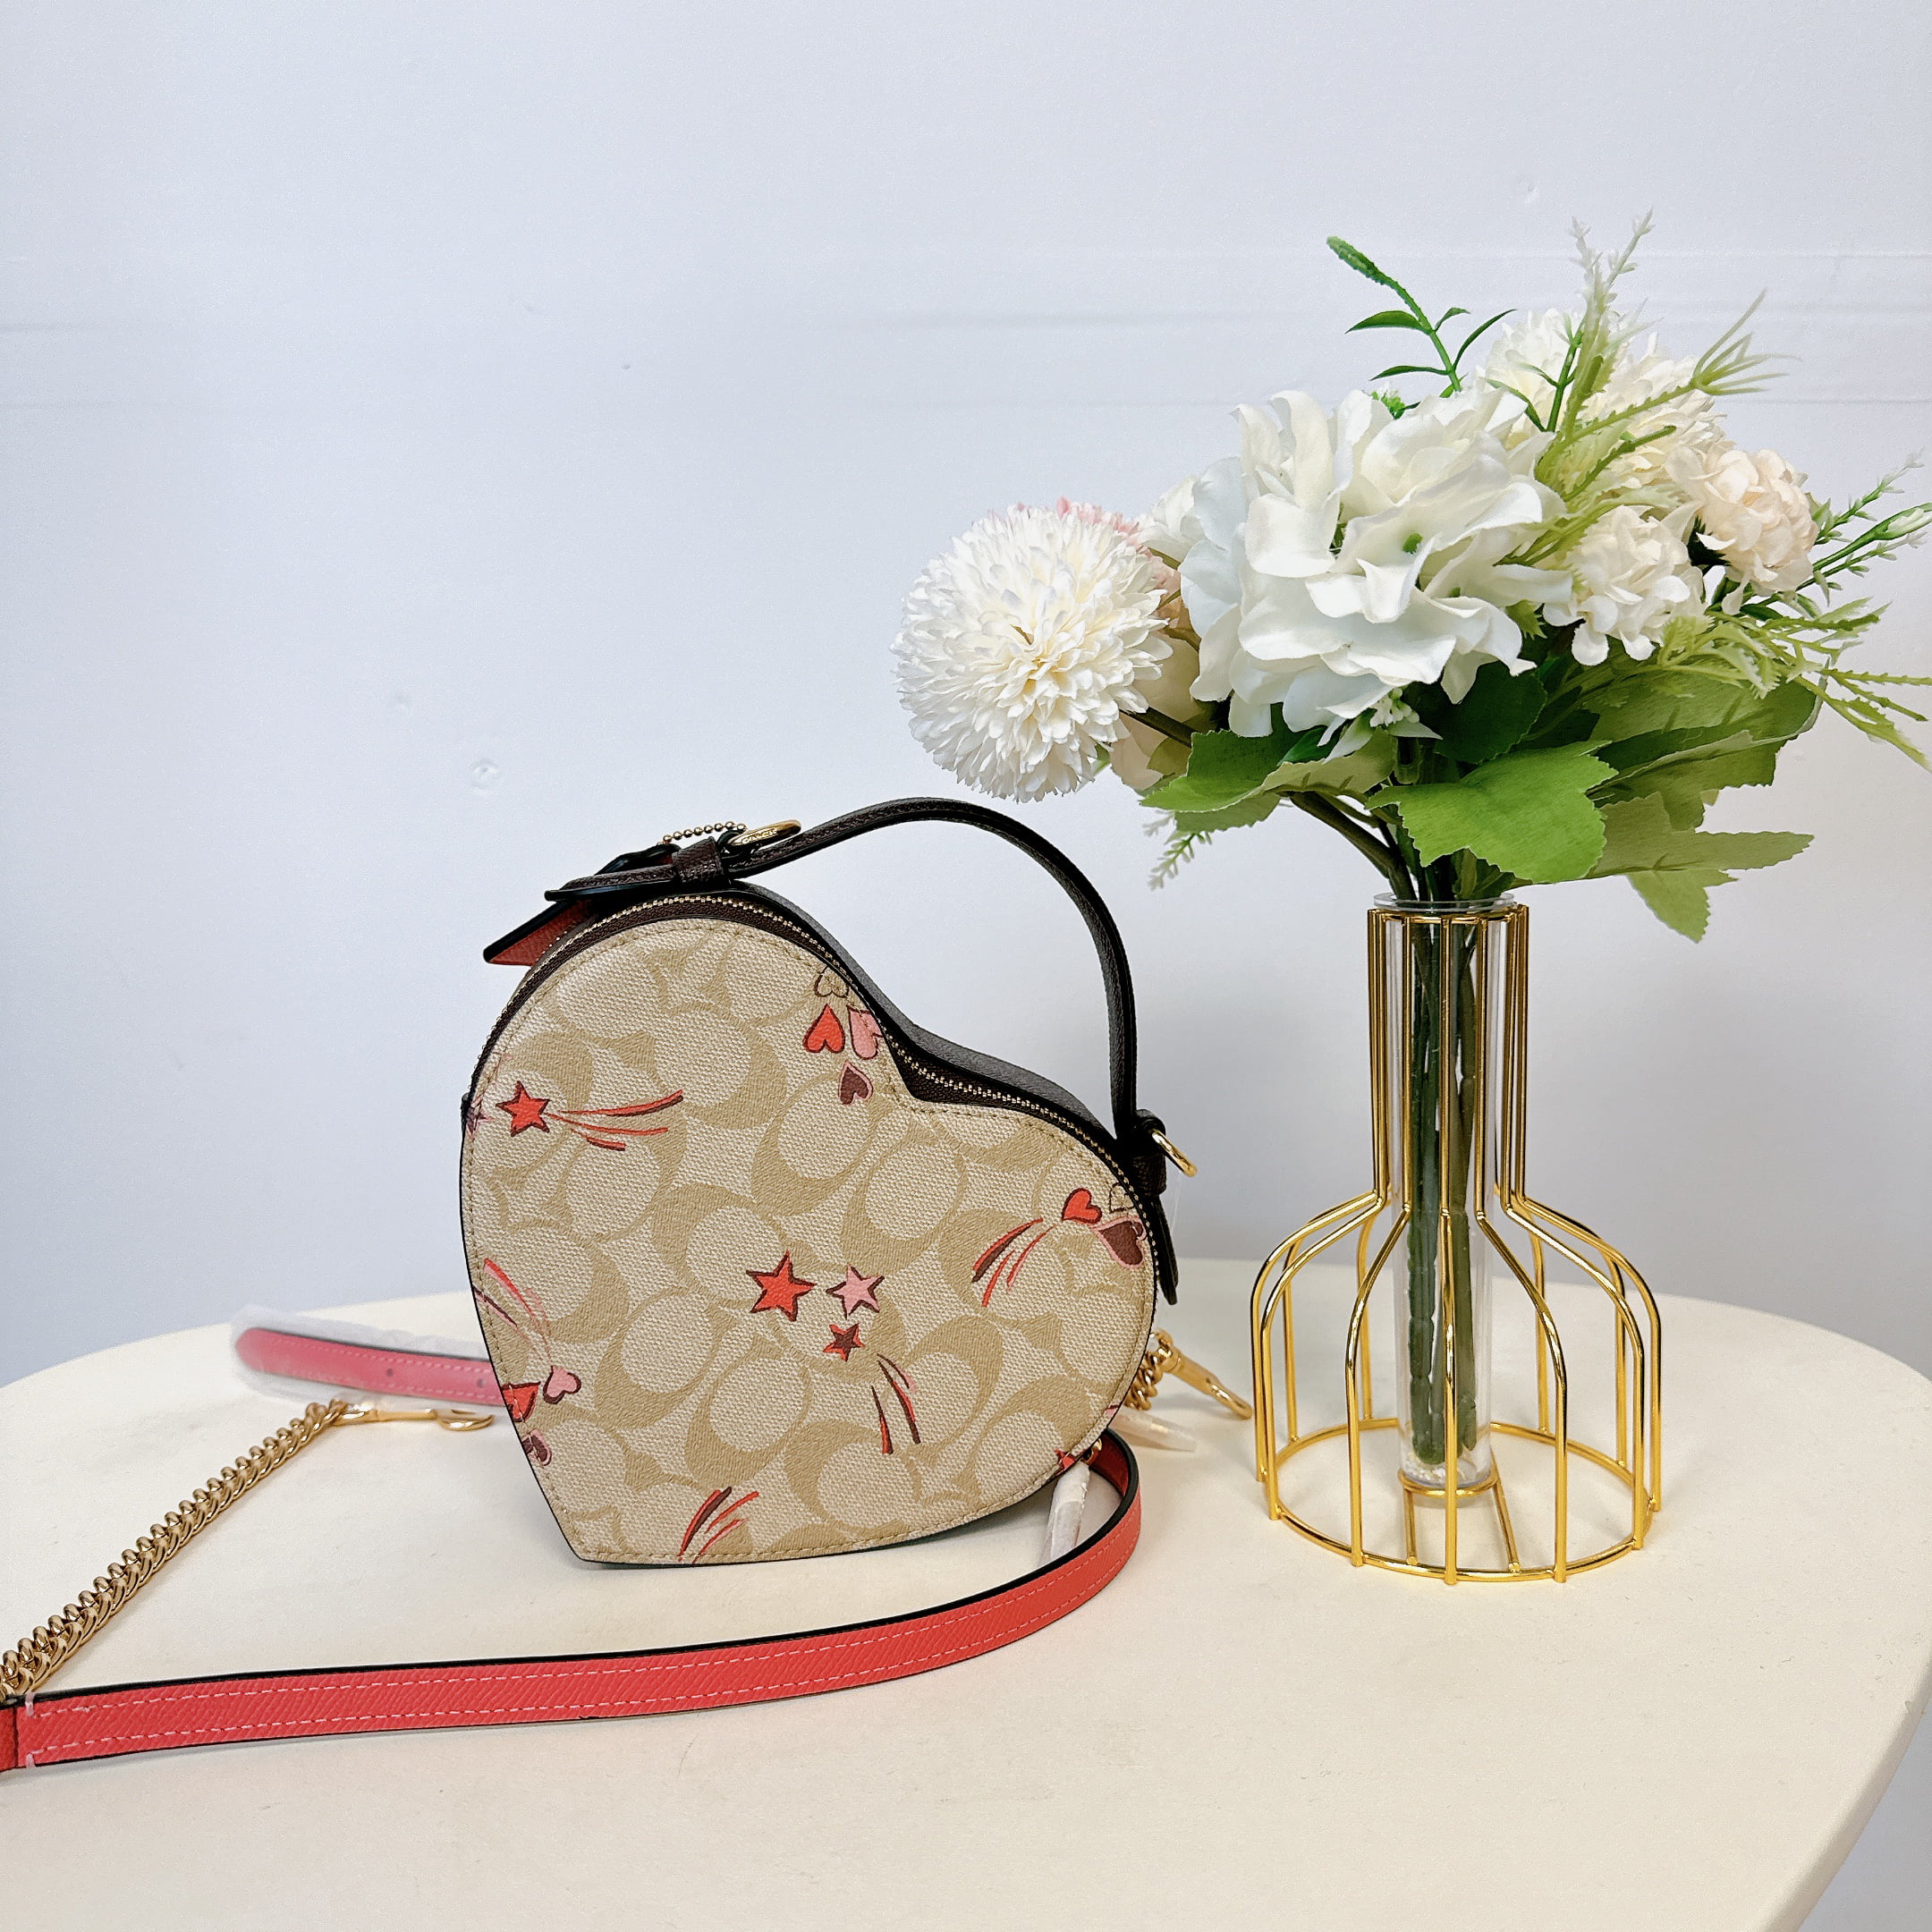 Louis Vuitton Monogram Blossoms Sac Coeur Handbag